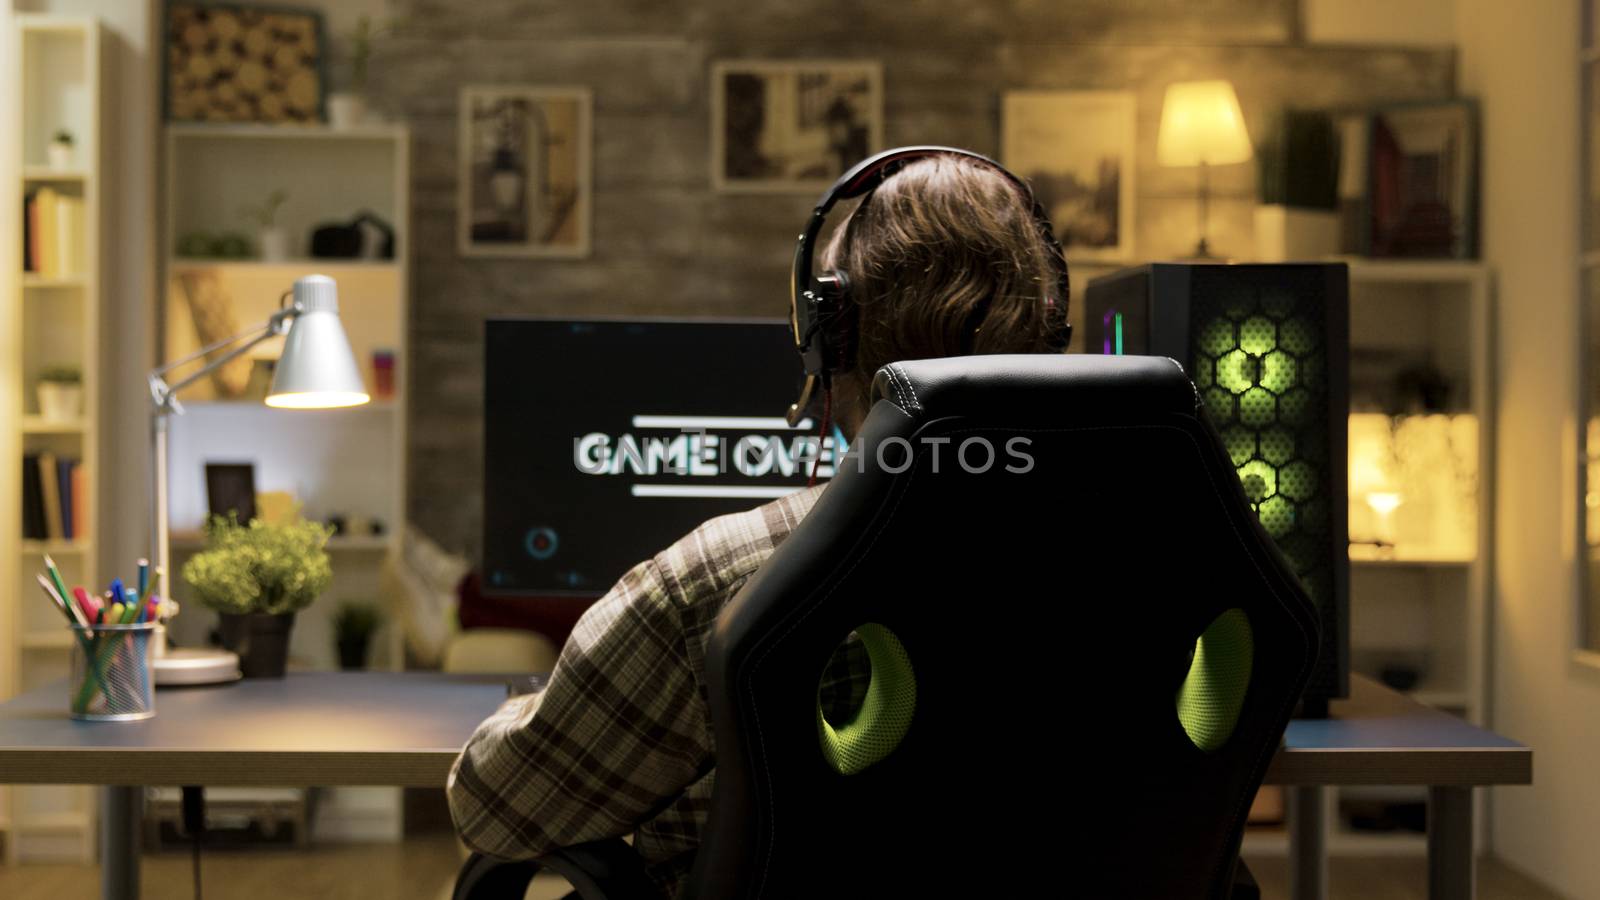 Over shoulder shot of man after losing at video games by DCStudio